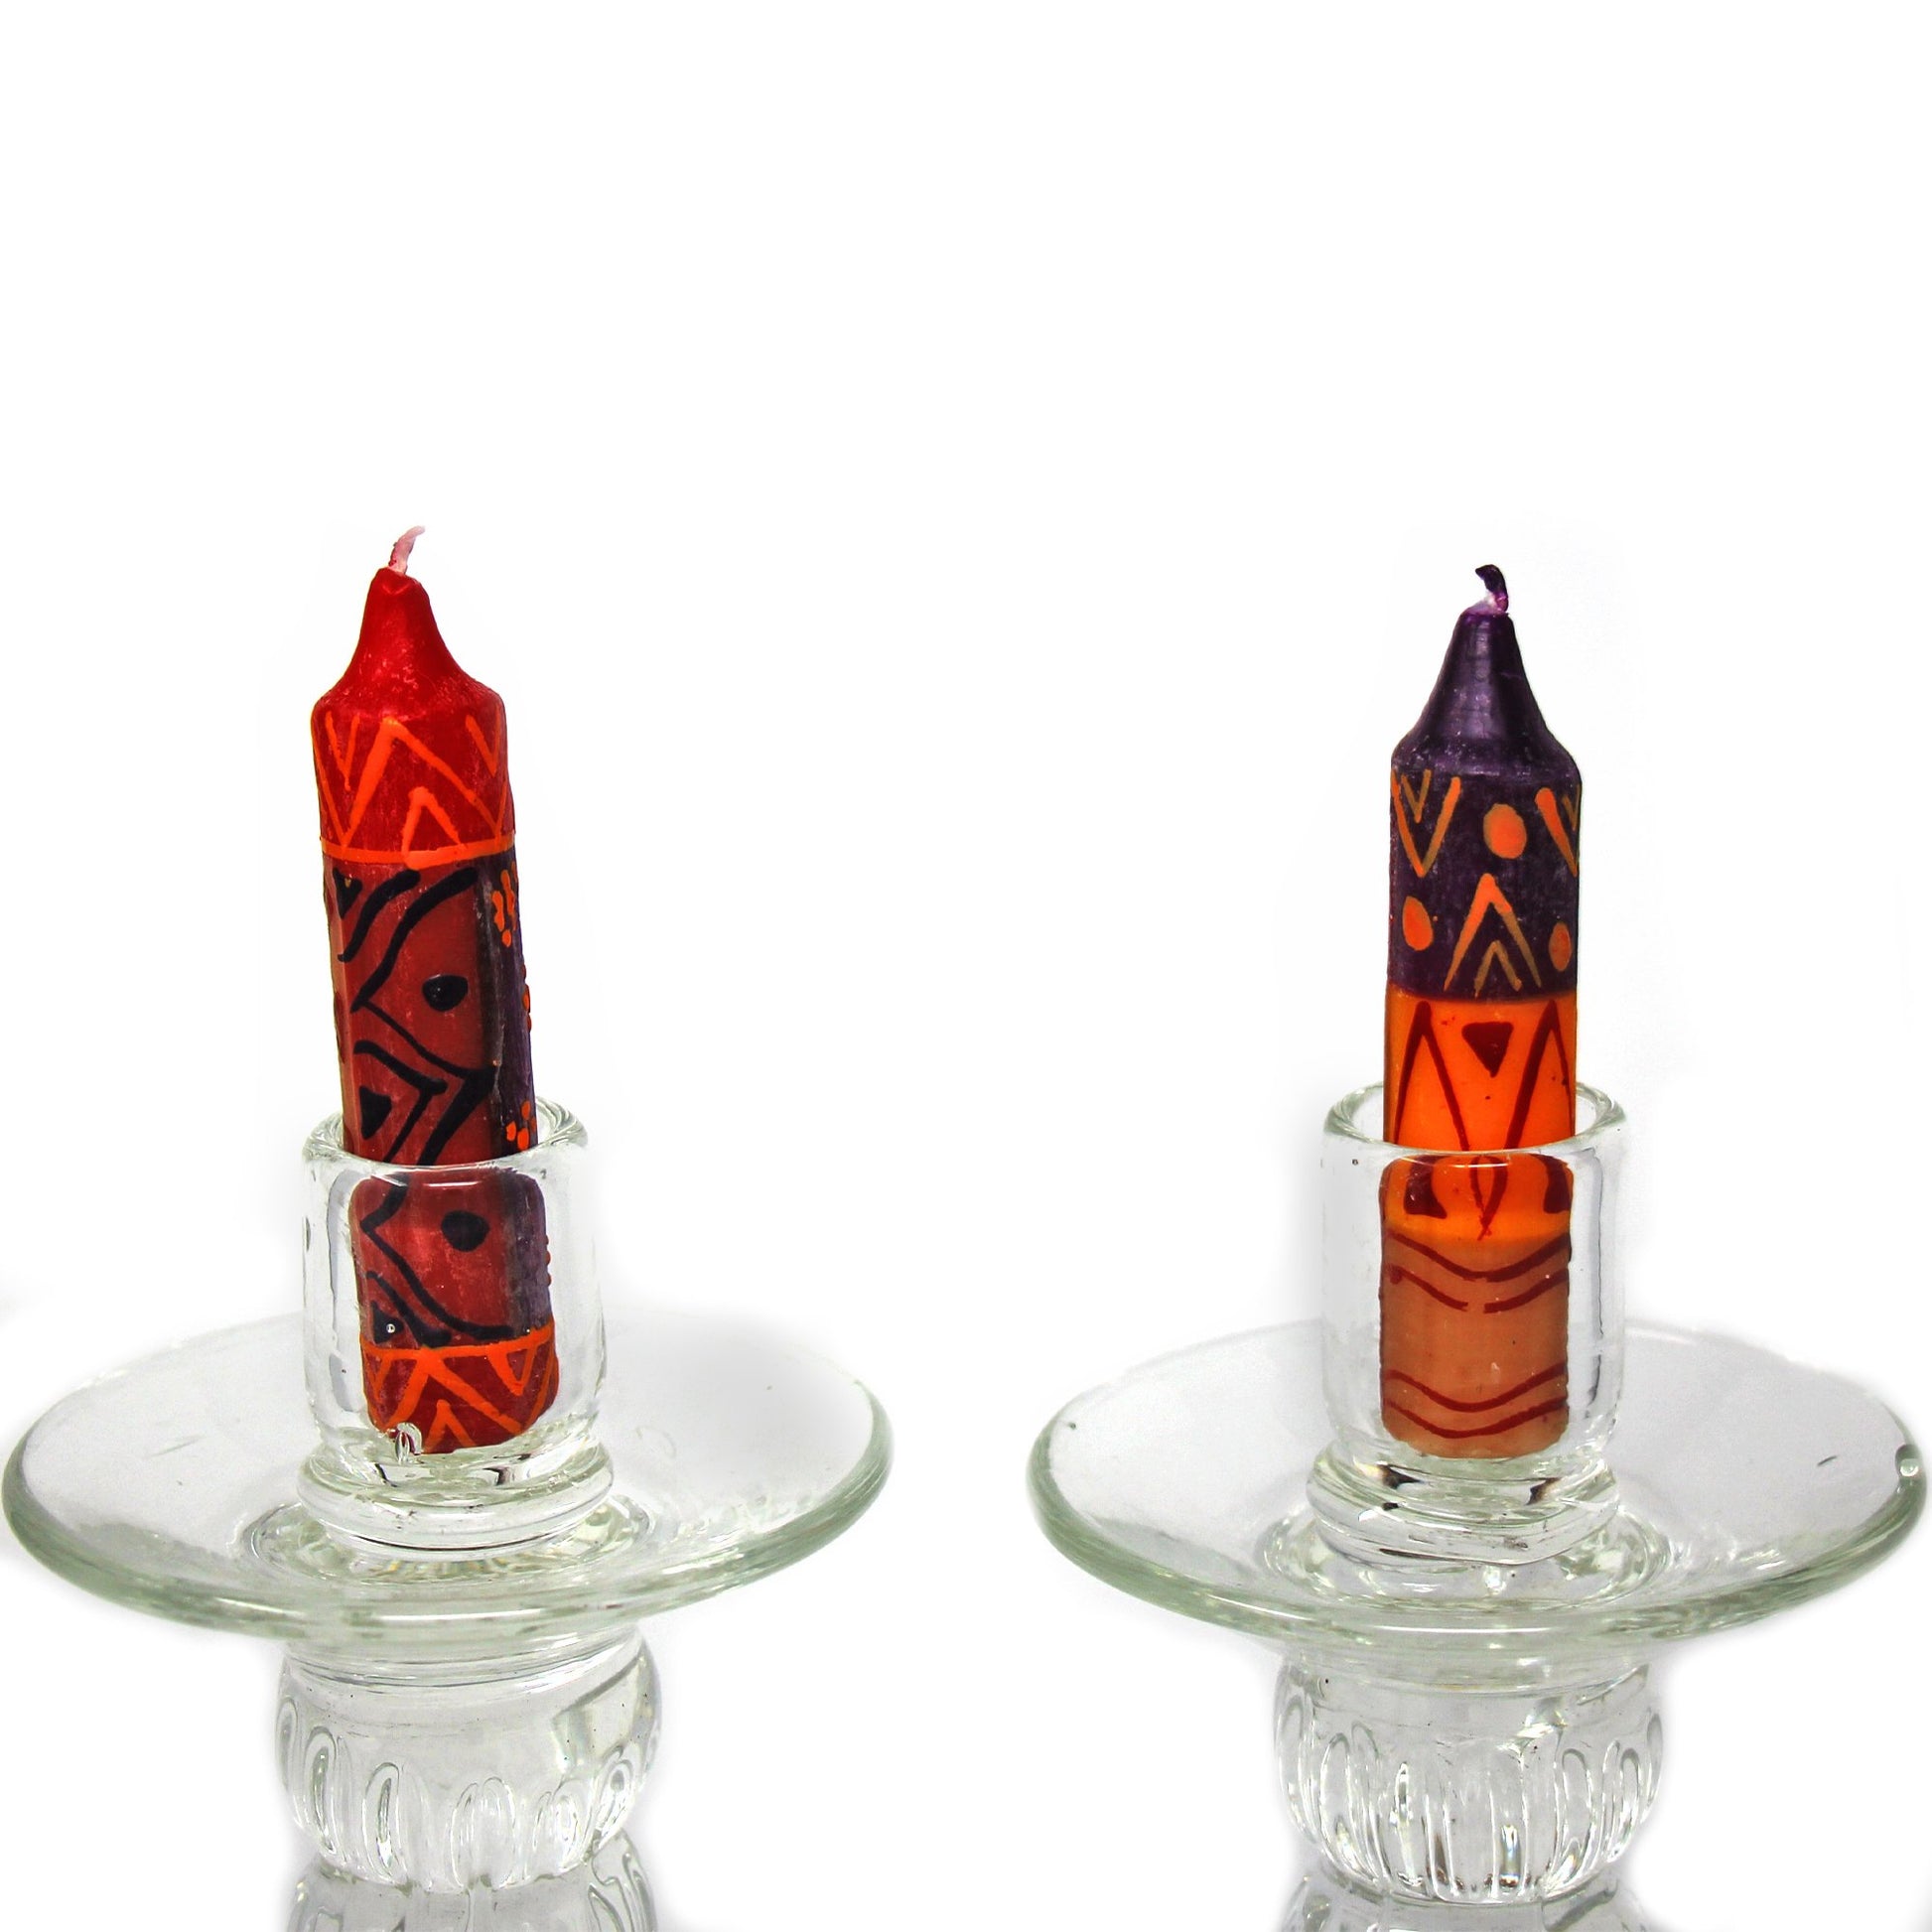 Hand-Painted 4" Dinner or Shabbat Candles, Set of 4  (Indabuko Design) - Linda Kay Gifford’s - Those Nasty Women TALK! by SWEETSurvivor